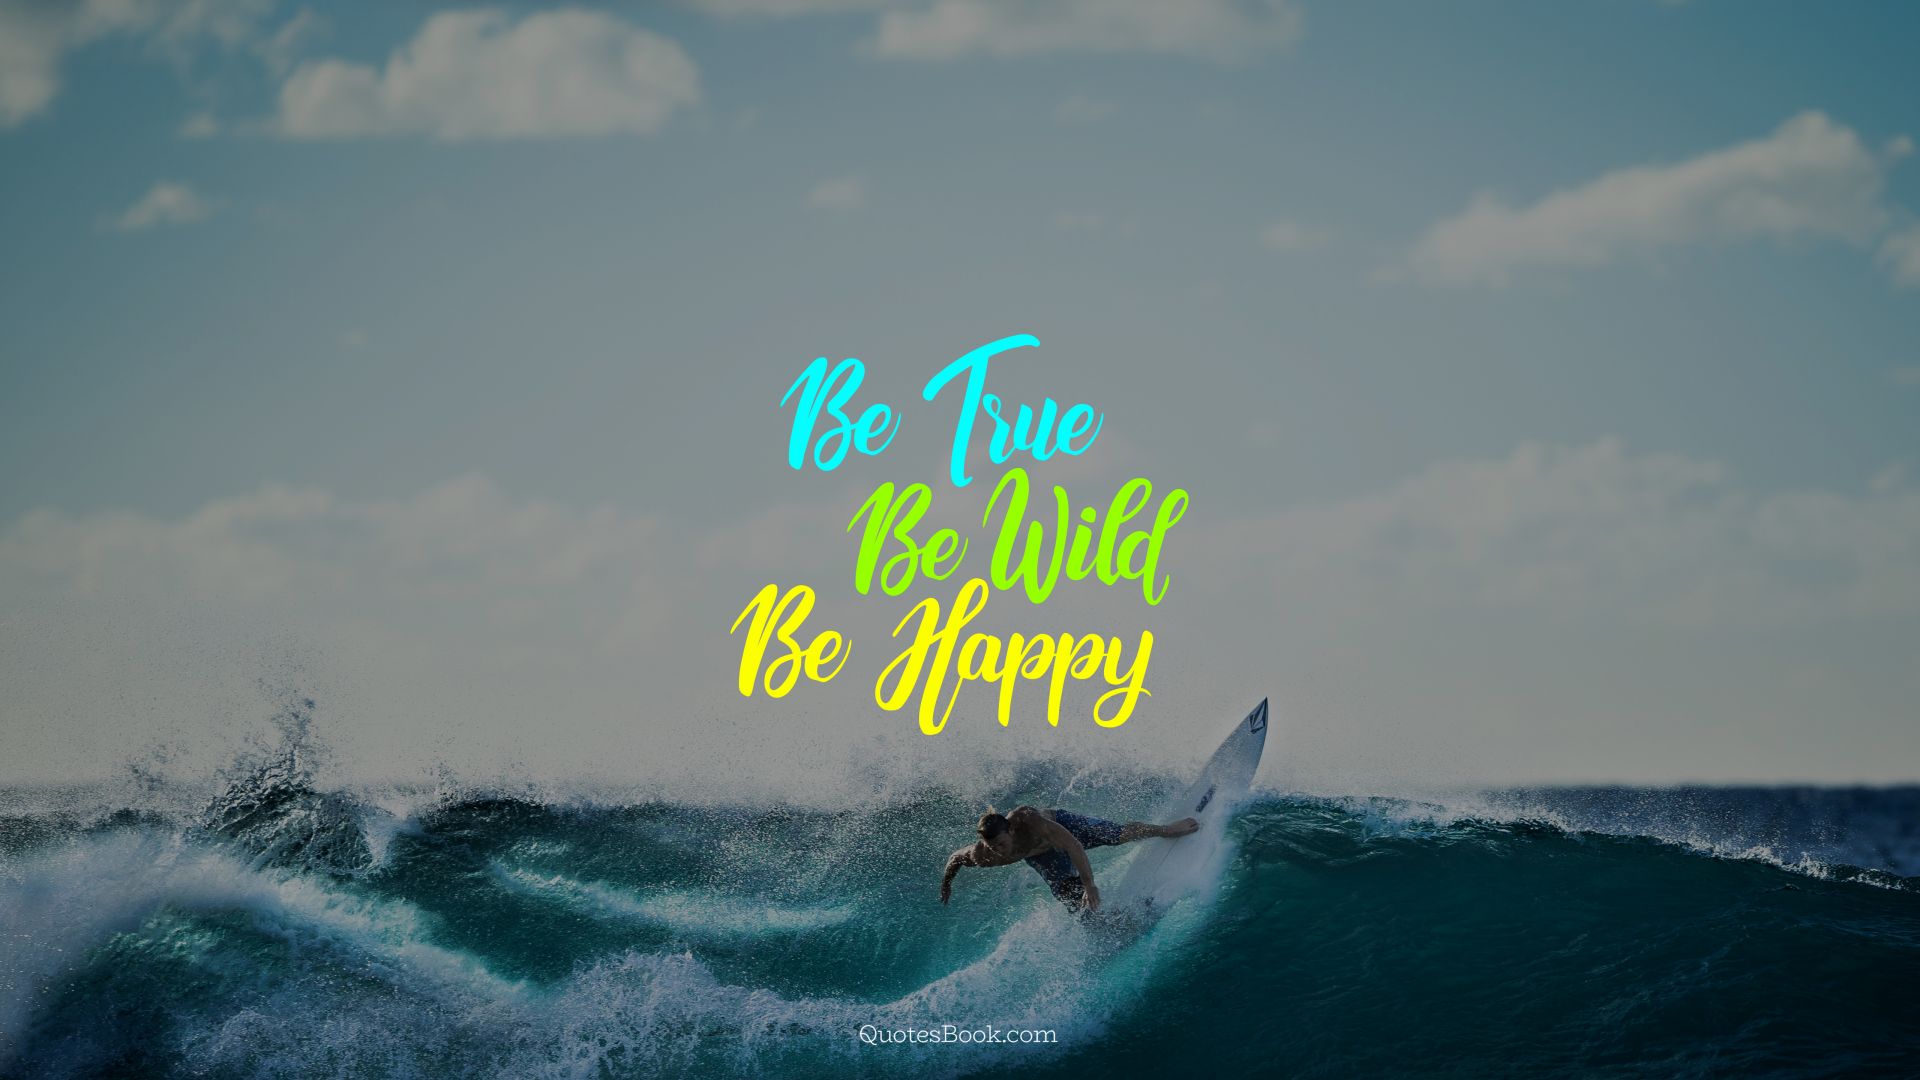 Be true be wild be happy